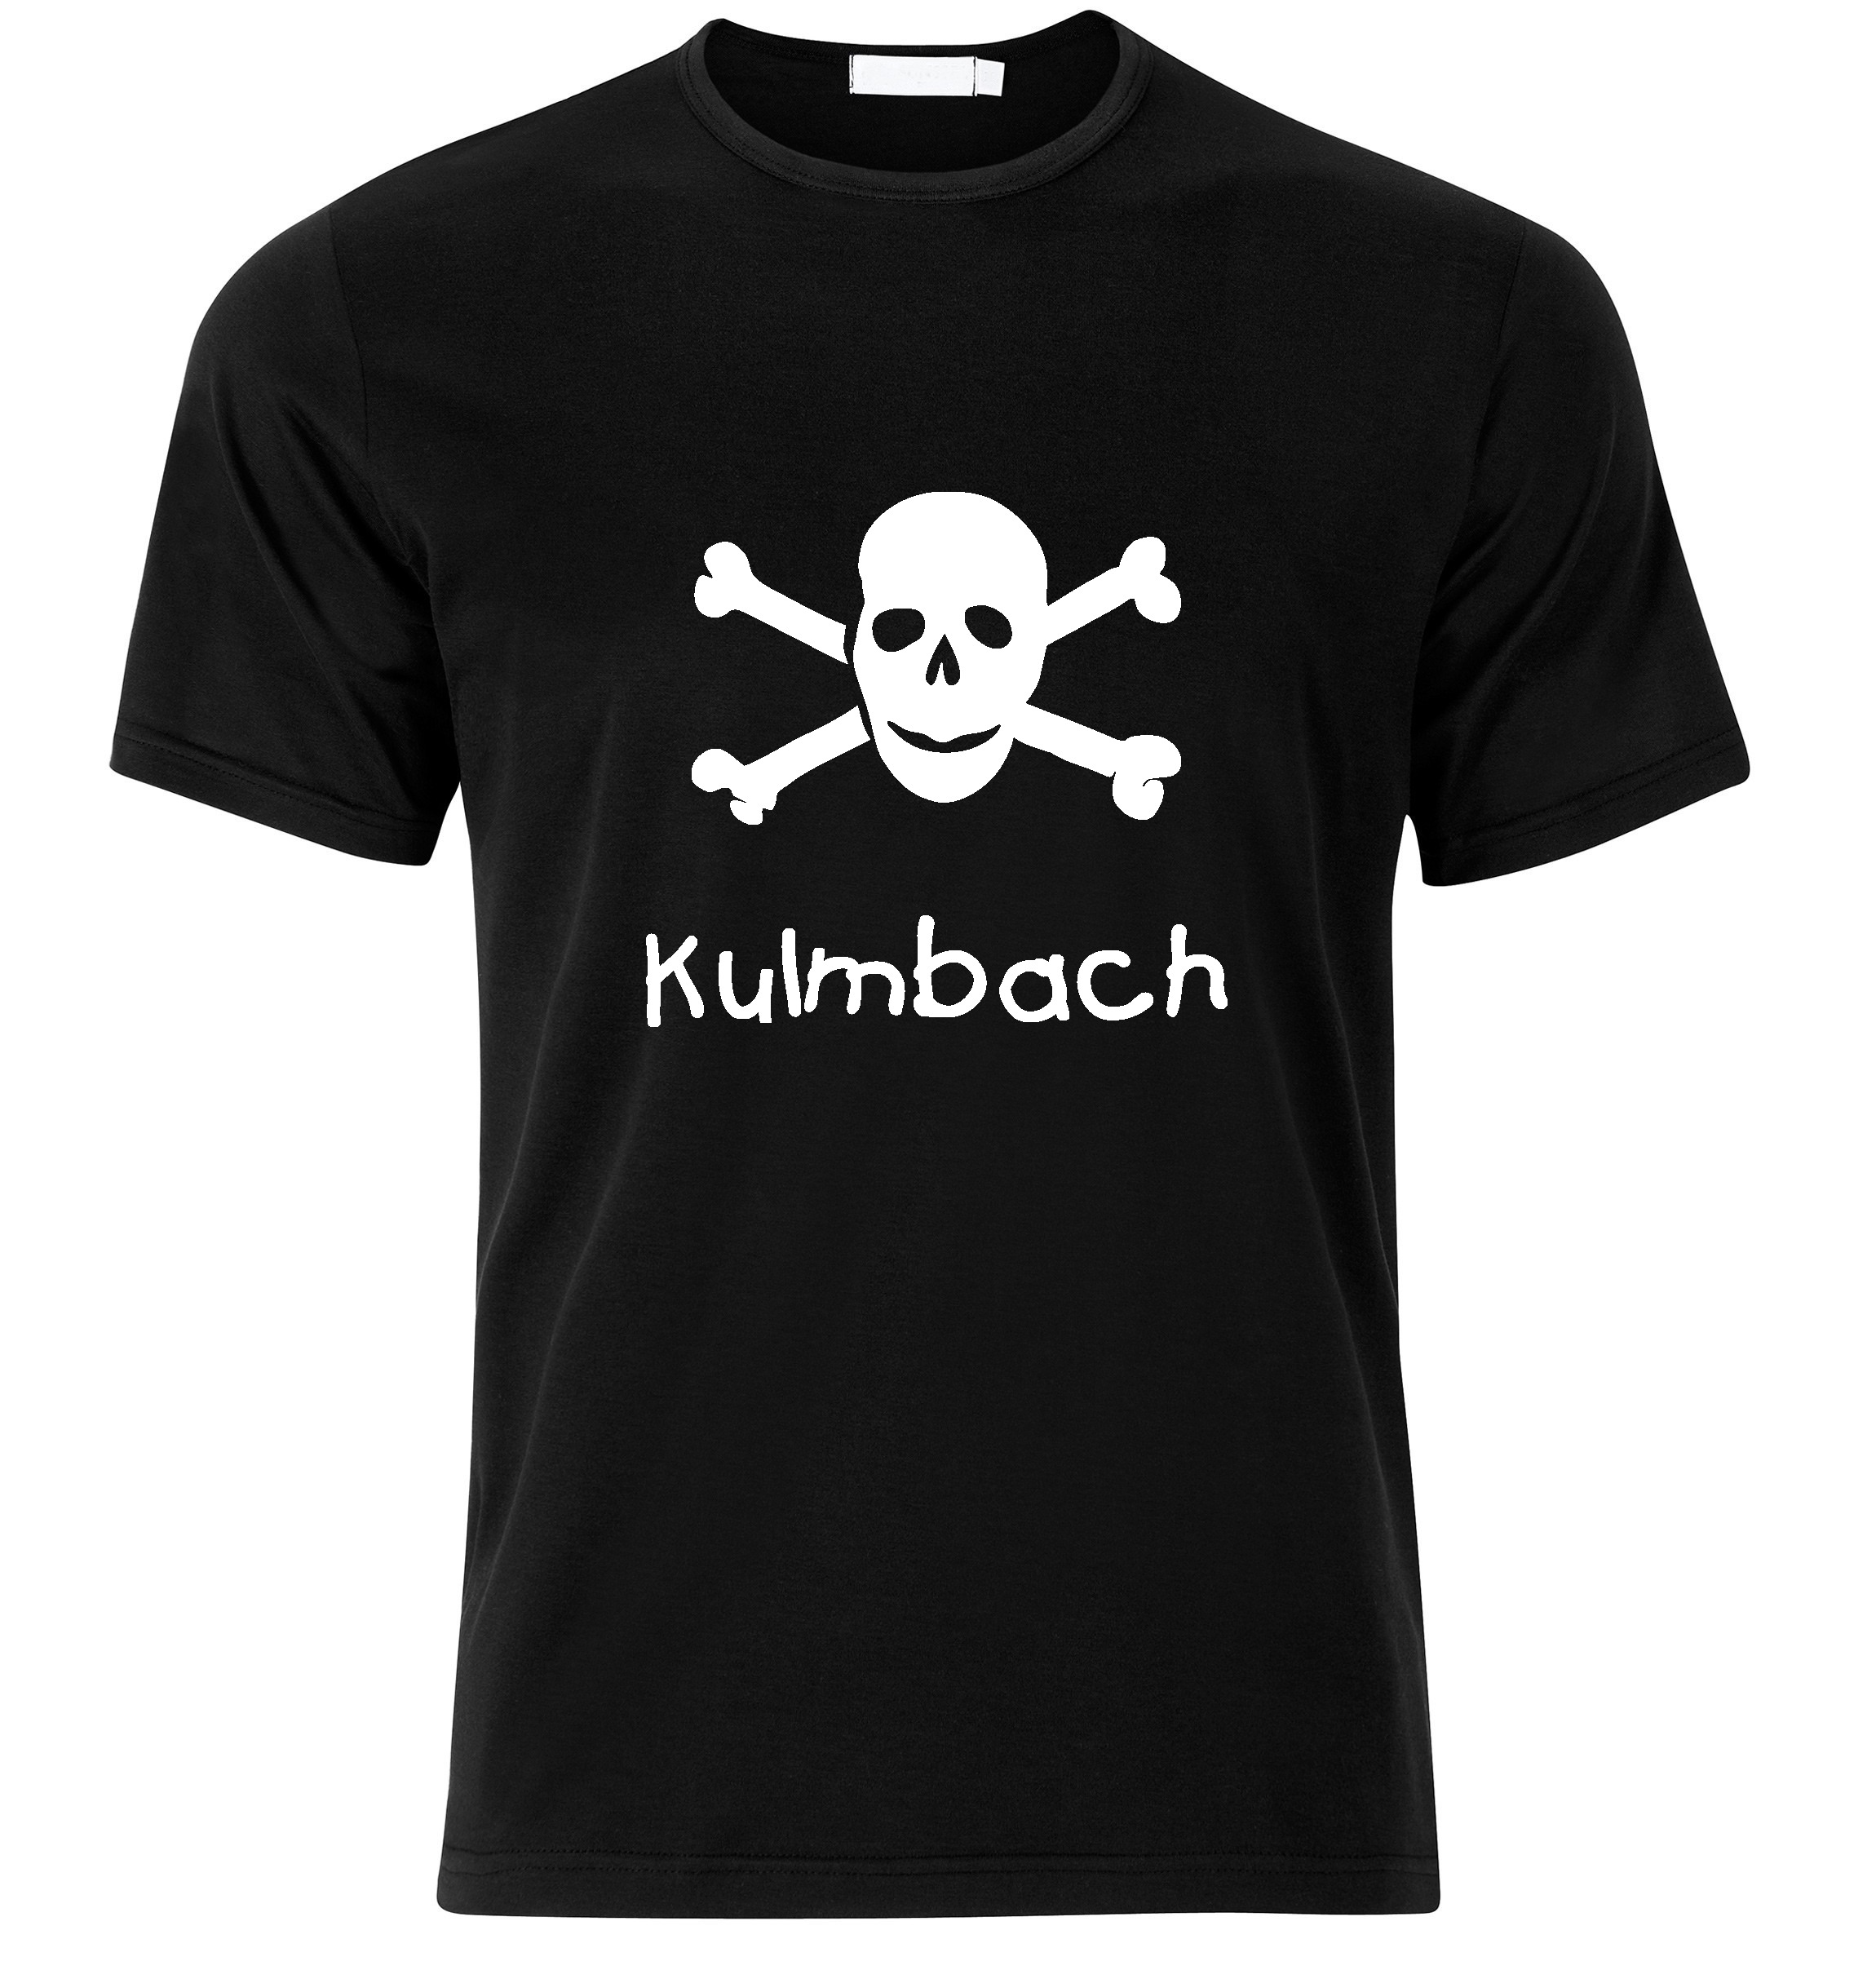 T-Shirt Kulmbach Jolly Roger, Totenkopf